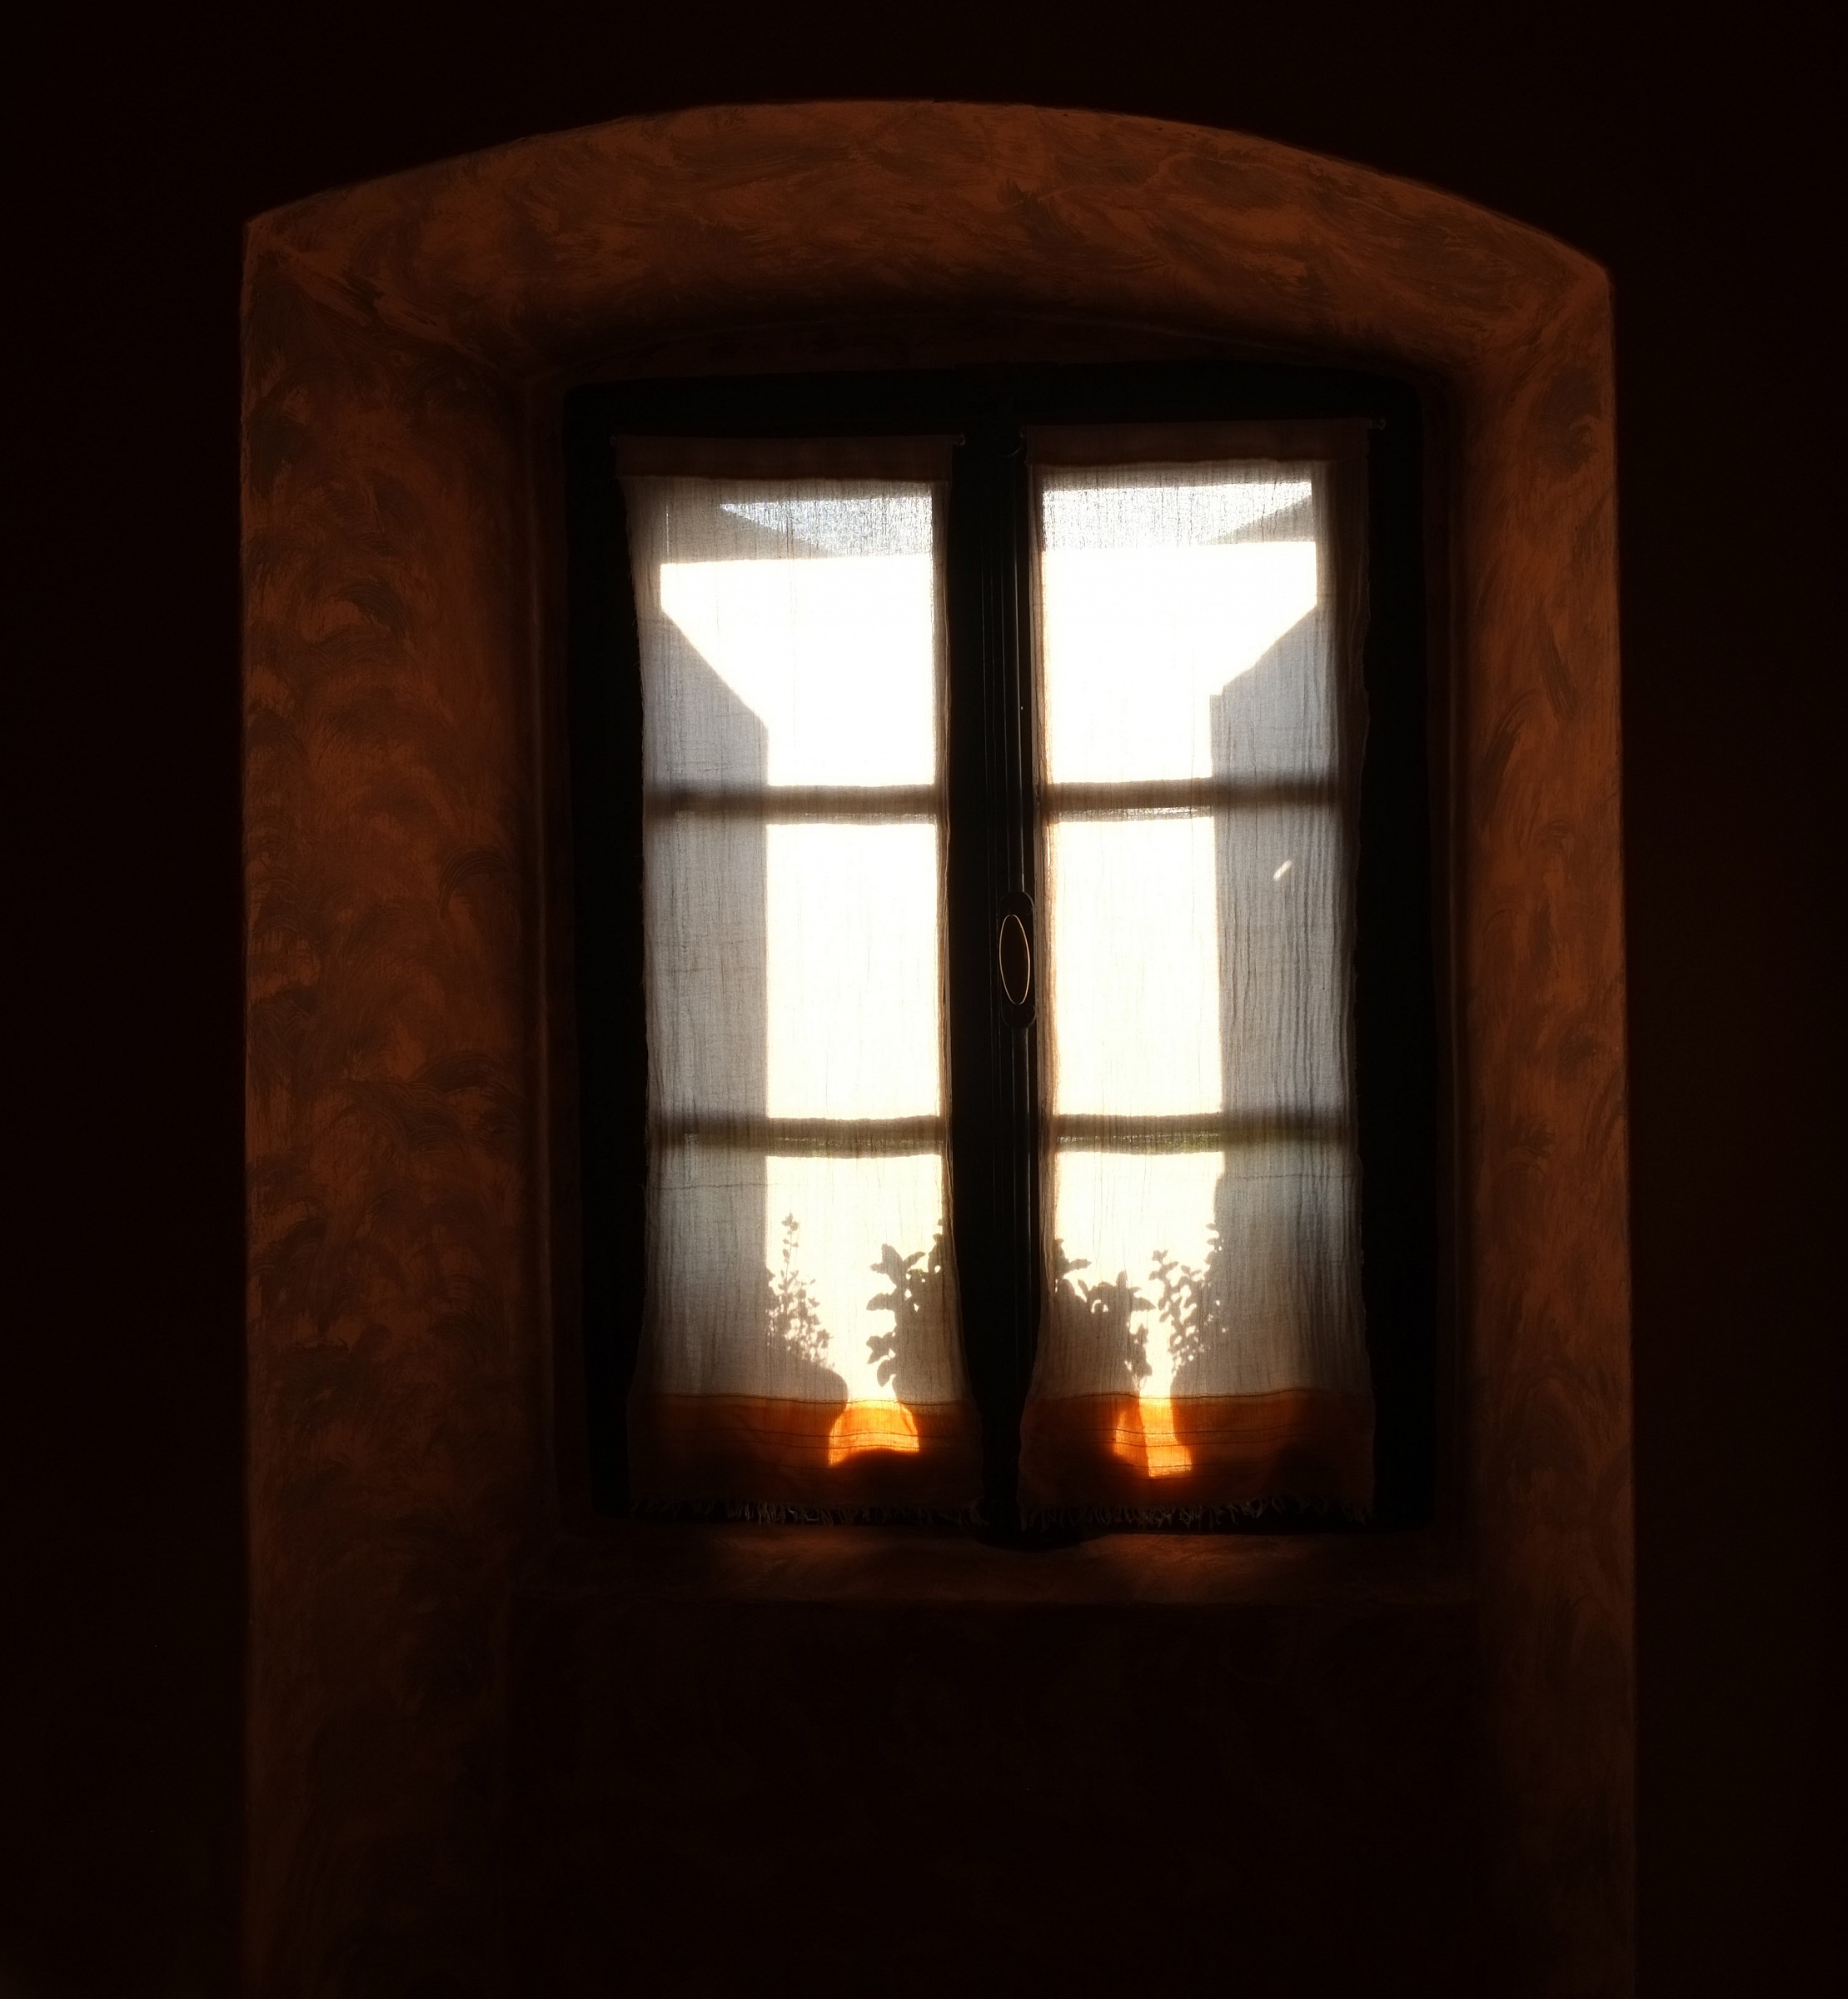 Window and shadows...